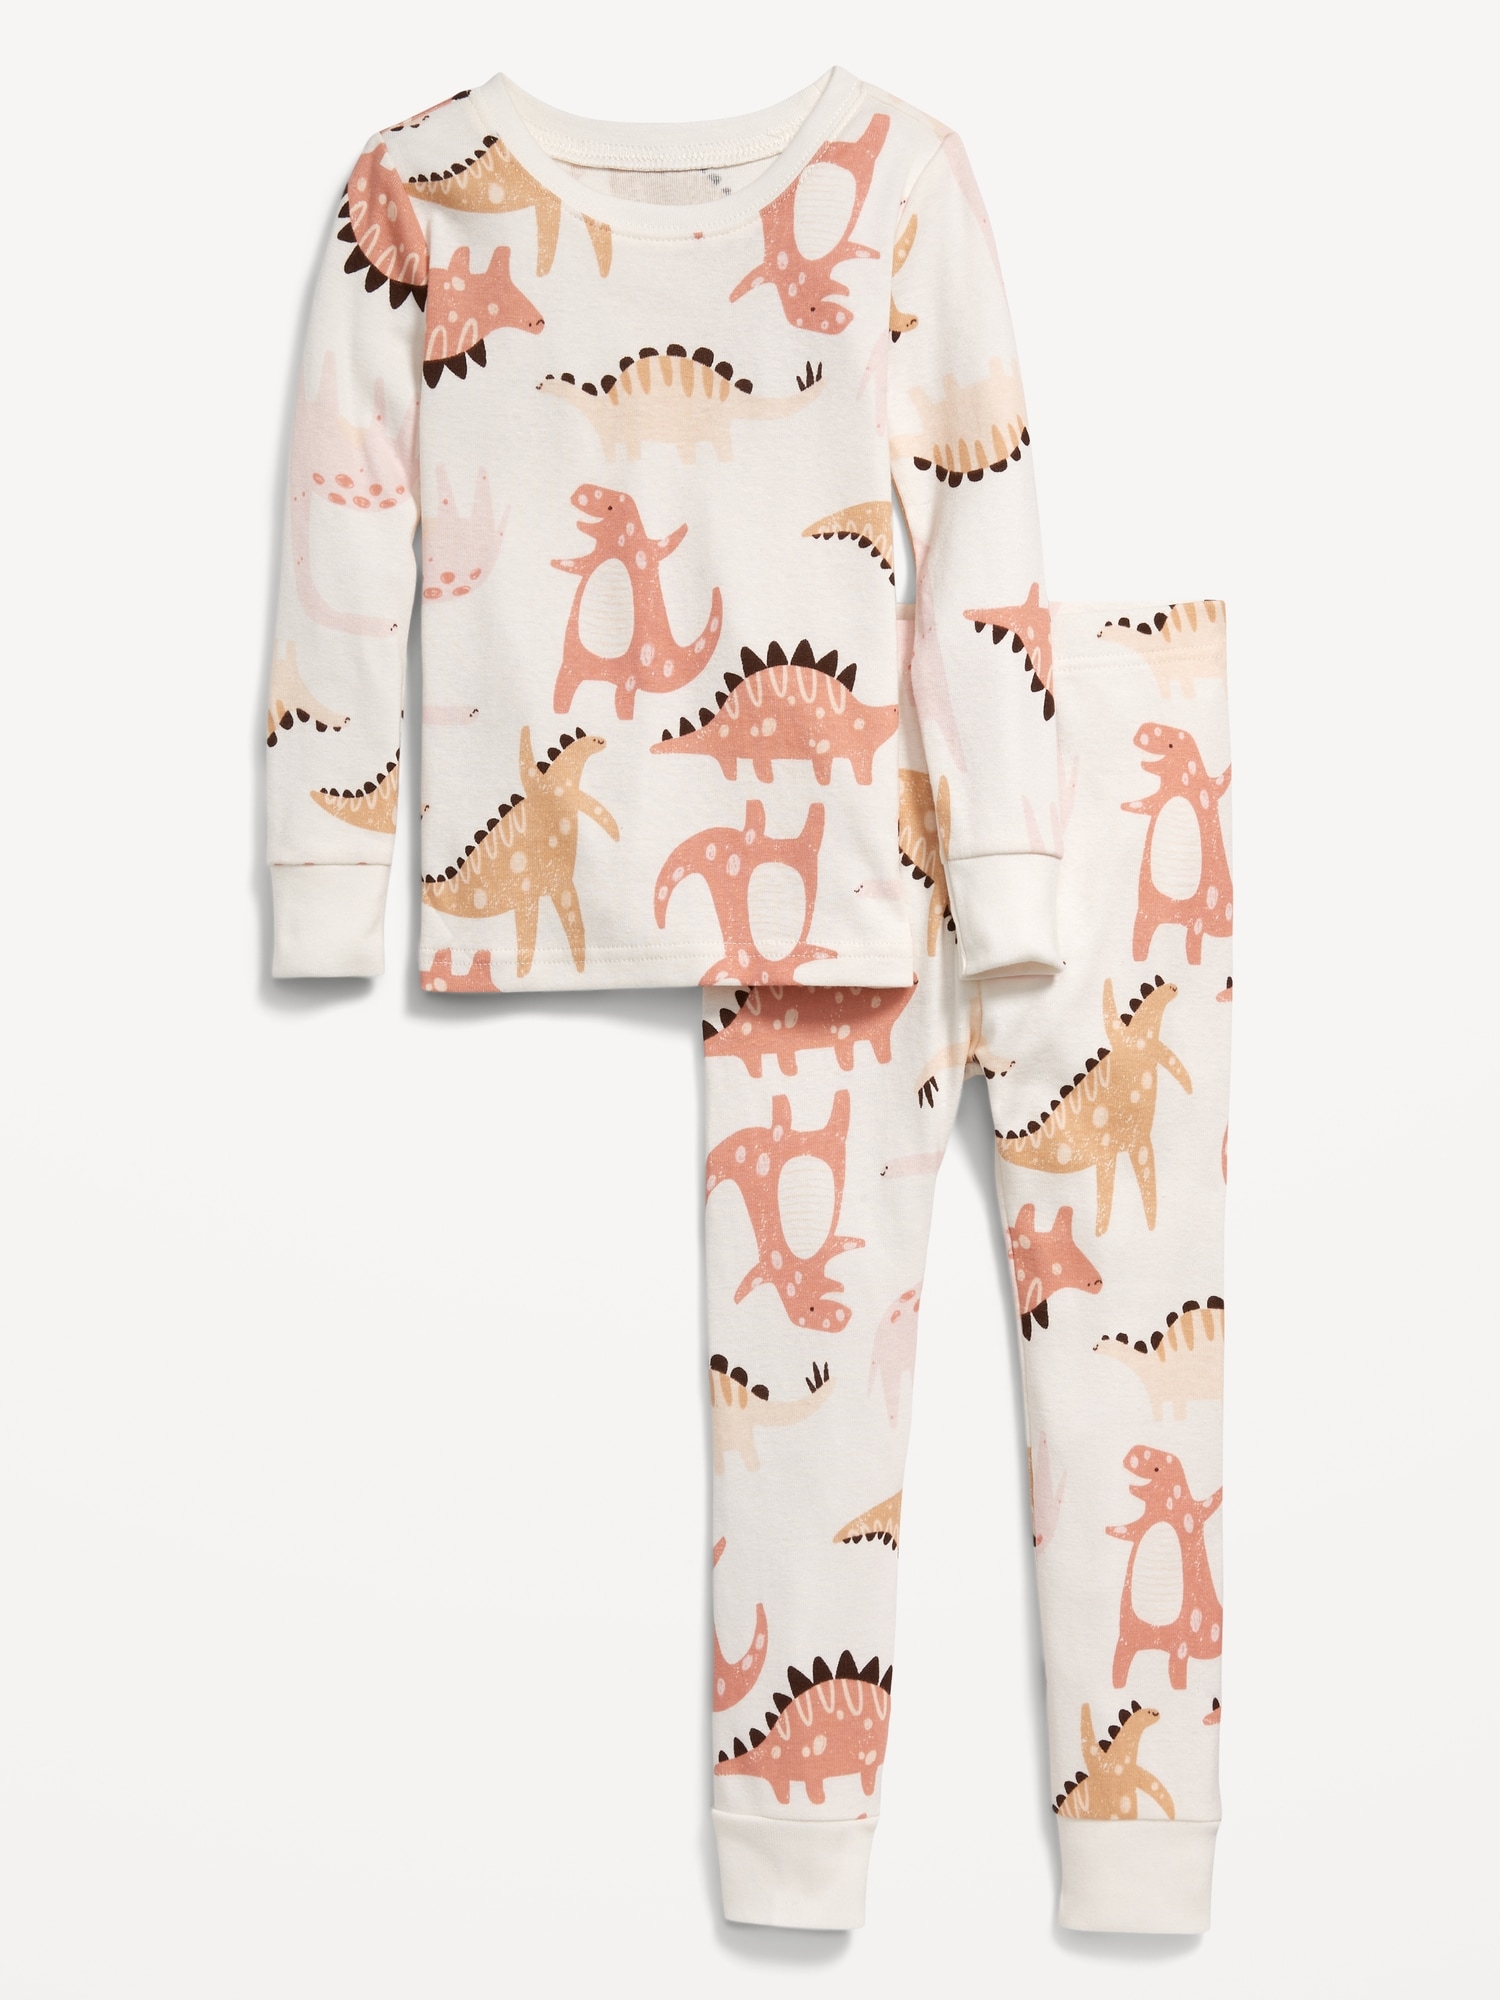 Unisex Snug-Fit Pajama Set for Toddler & Baby Hot Deal